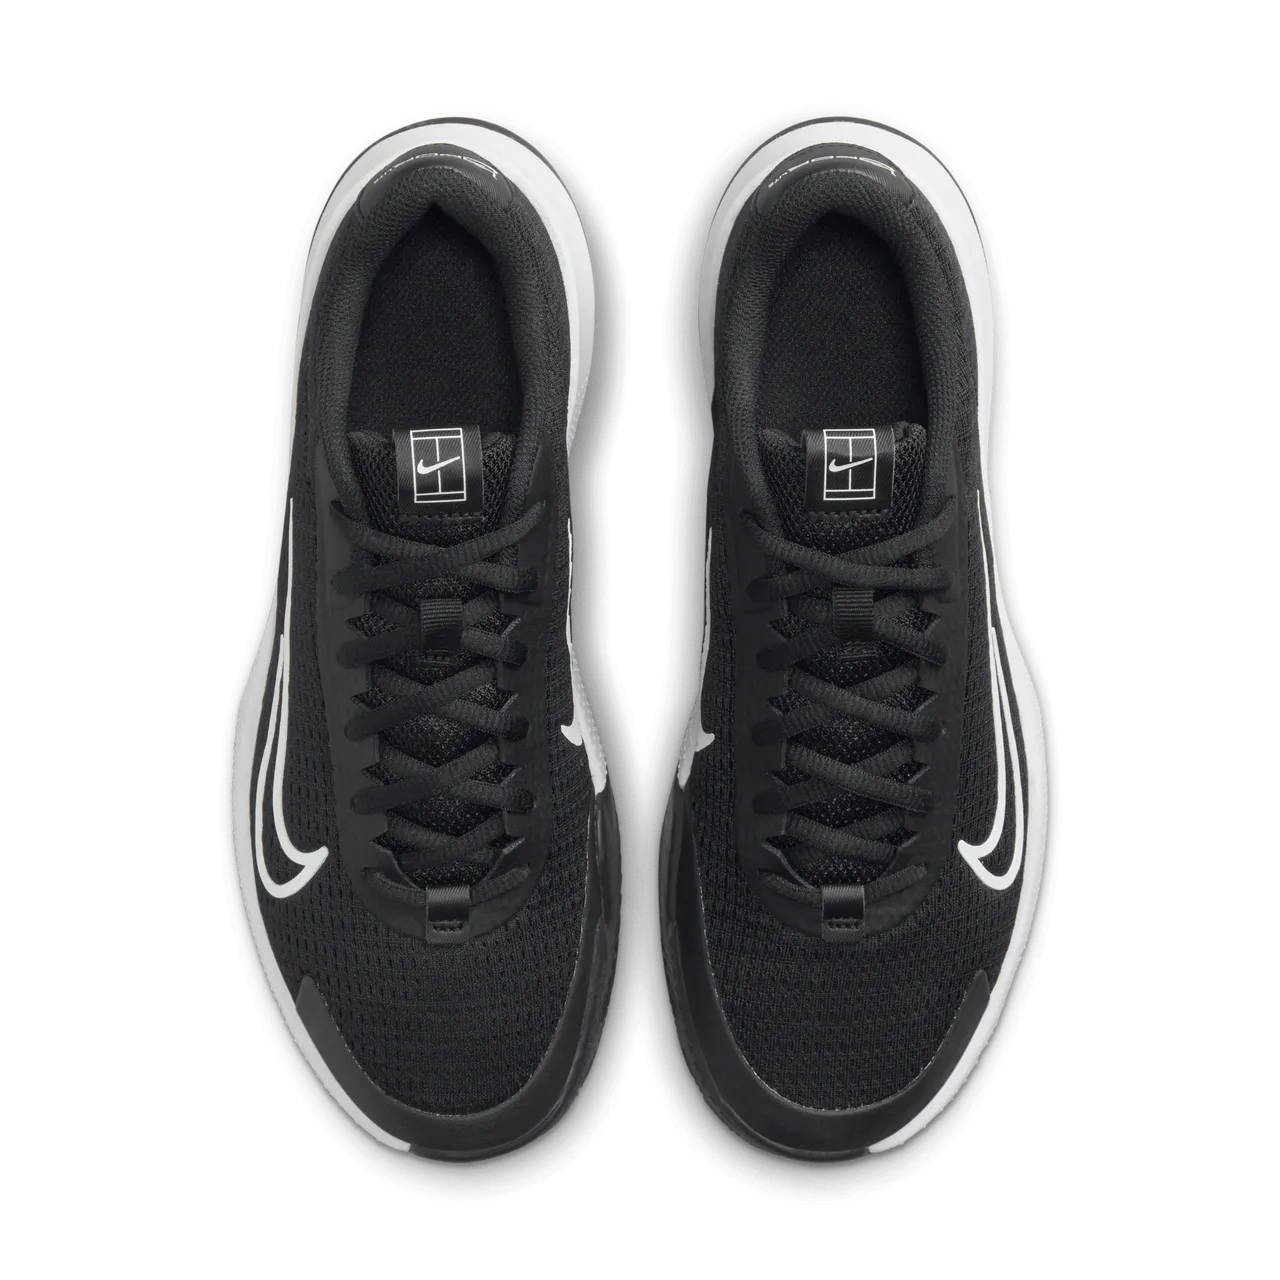 NikeCourt Vapor Lite 2 Women's Clay Tennis Shoes - Black